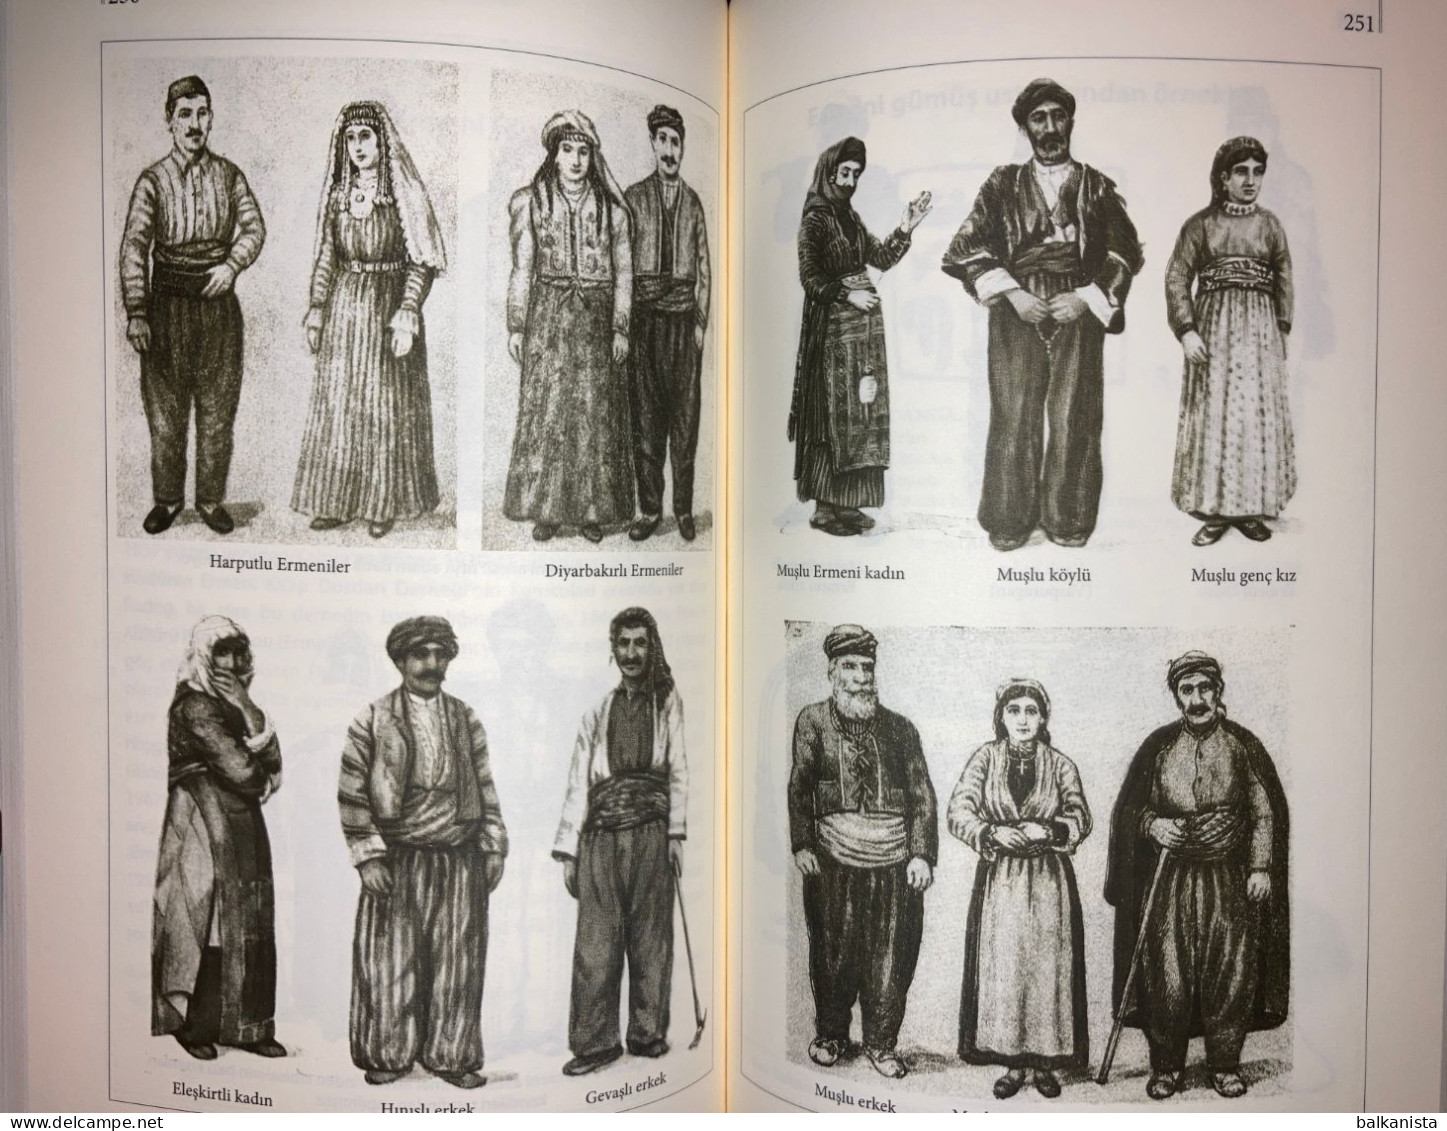 Palu-Harput 1878 Armenians Anatolia Ottoman Arsen Yarman 2 Book - Cultura